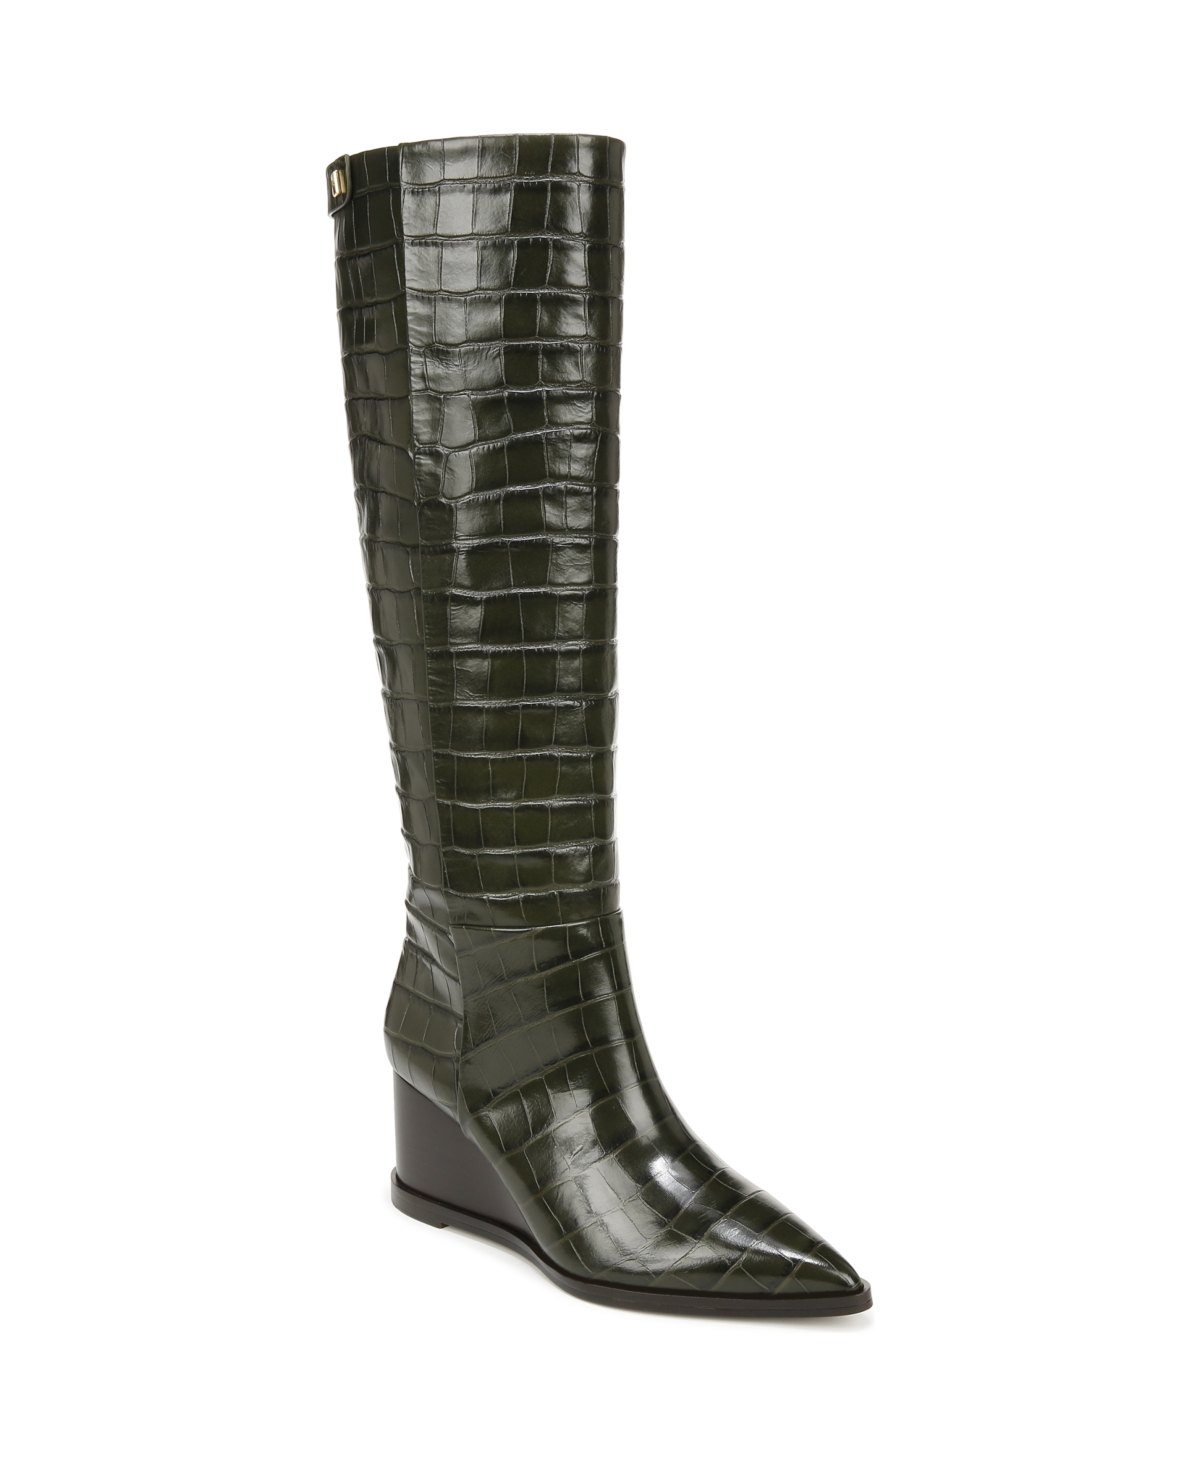 Estella Knee High Boots - Olive Green Croc Leather